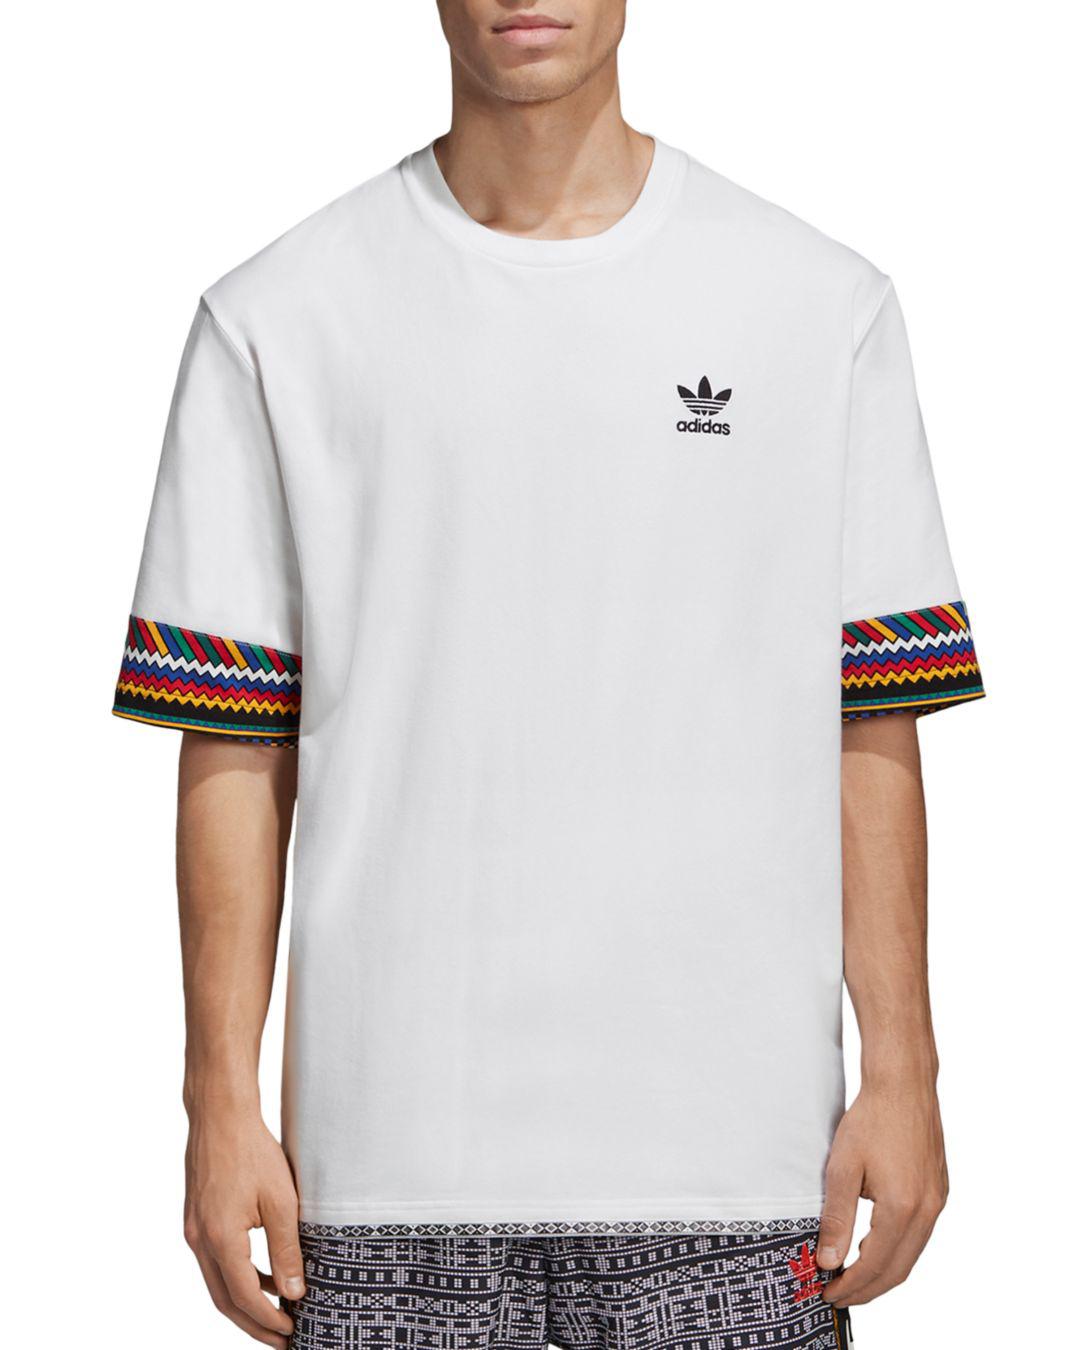 Adidas Pharrell Williams T Shirt Top Sellers, 59% OFF | www.thaichaplain.com